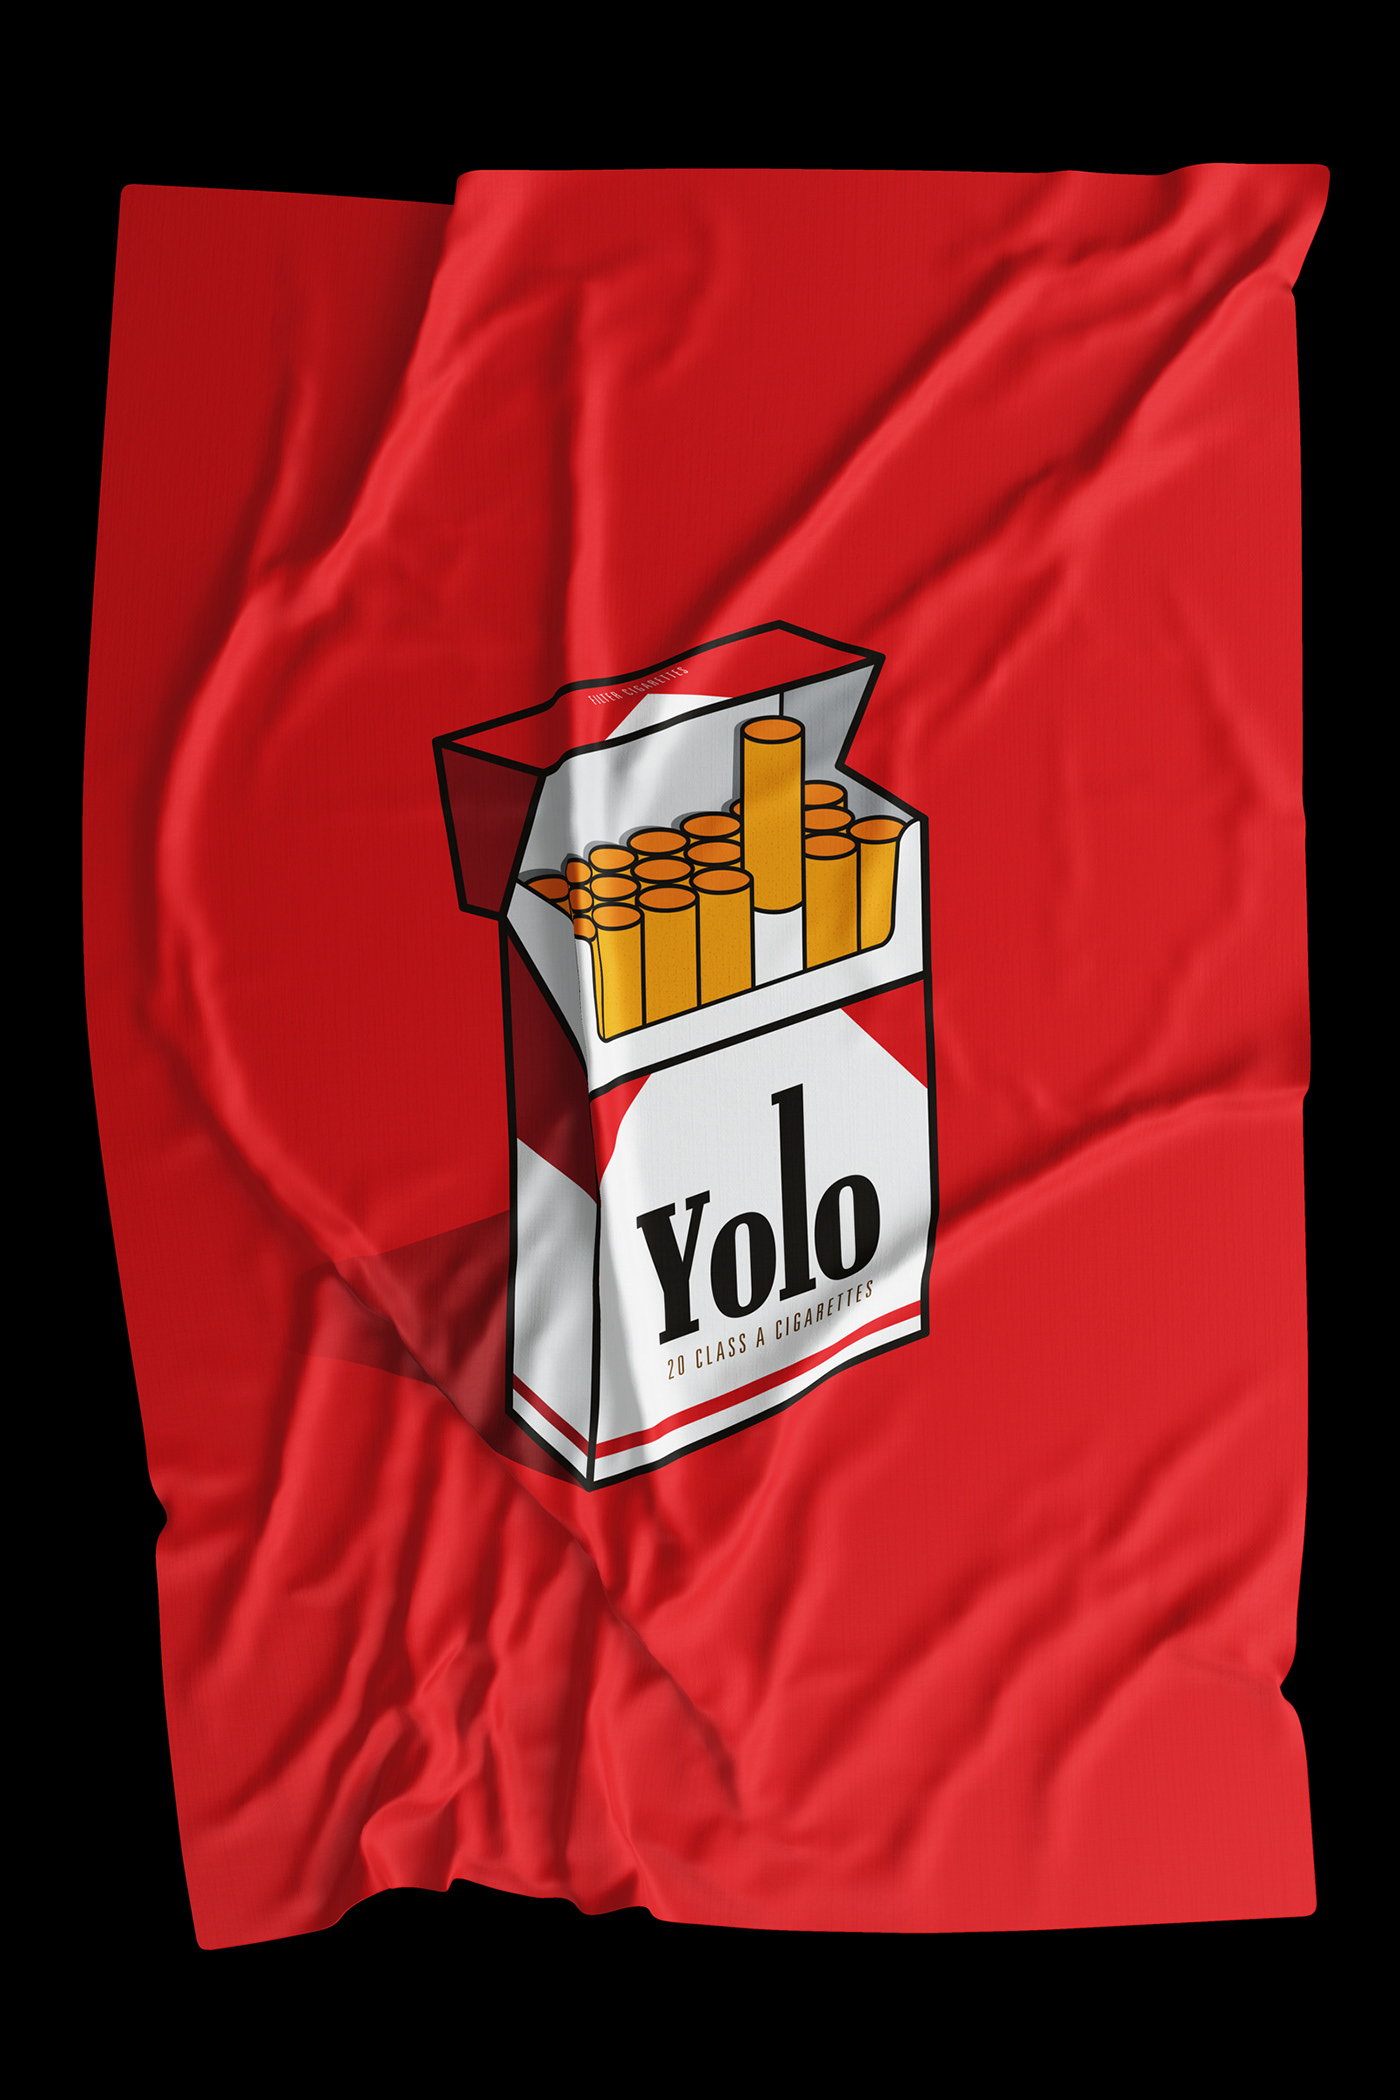 marlboro cigarette smoke red Pop Art Packaging